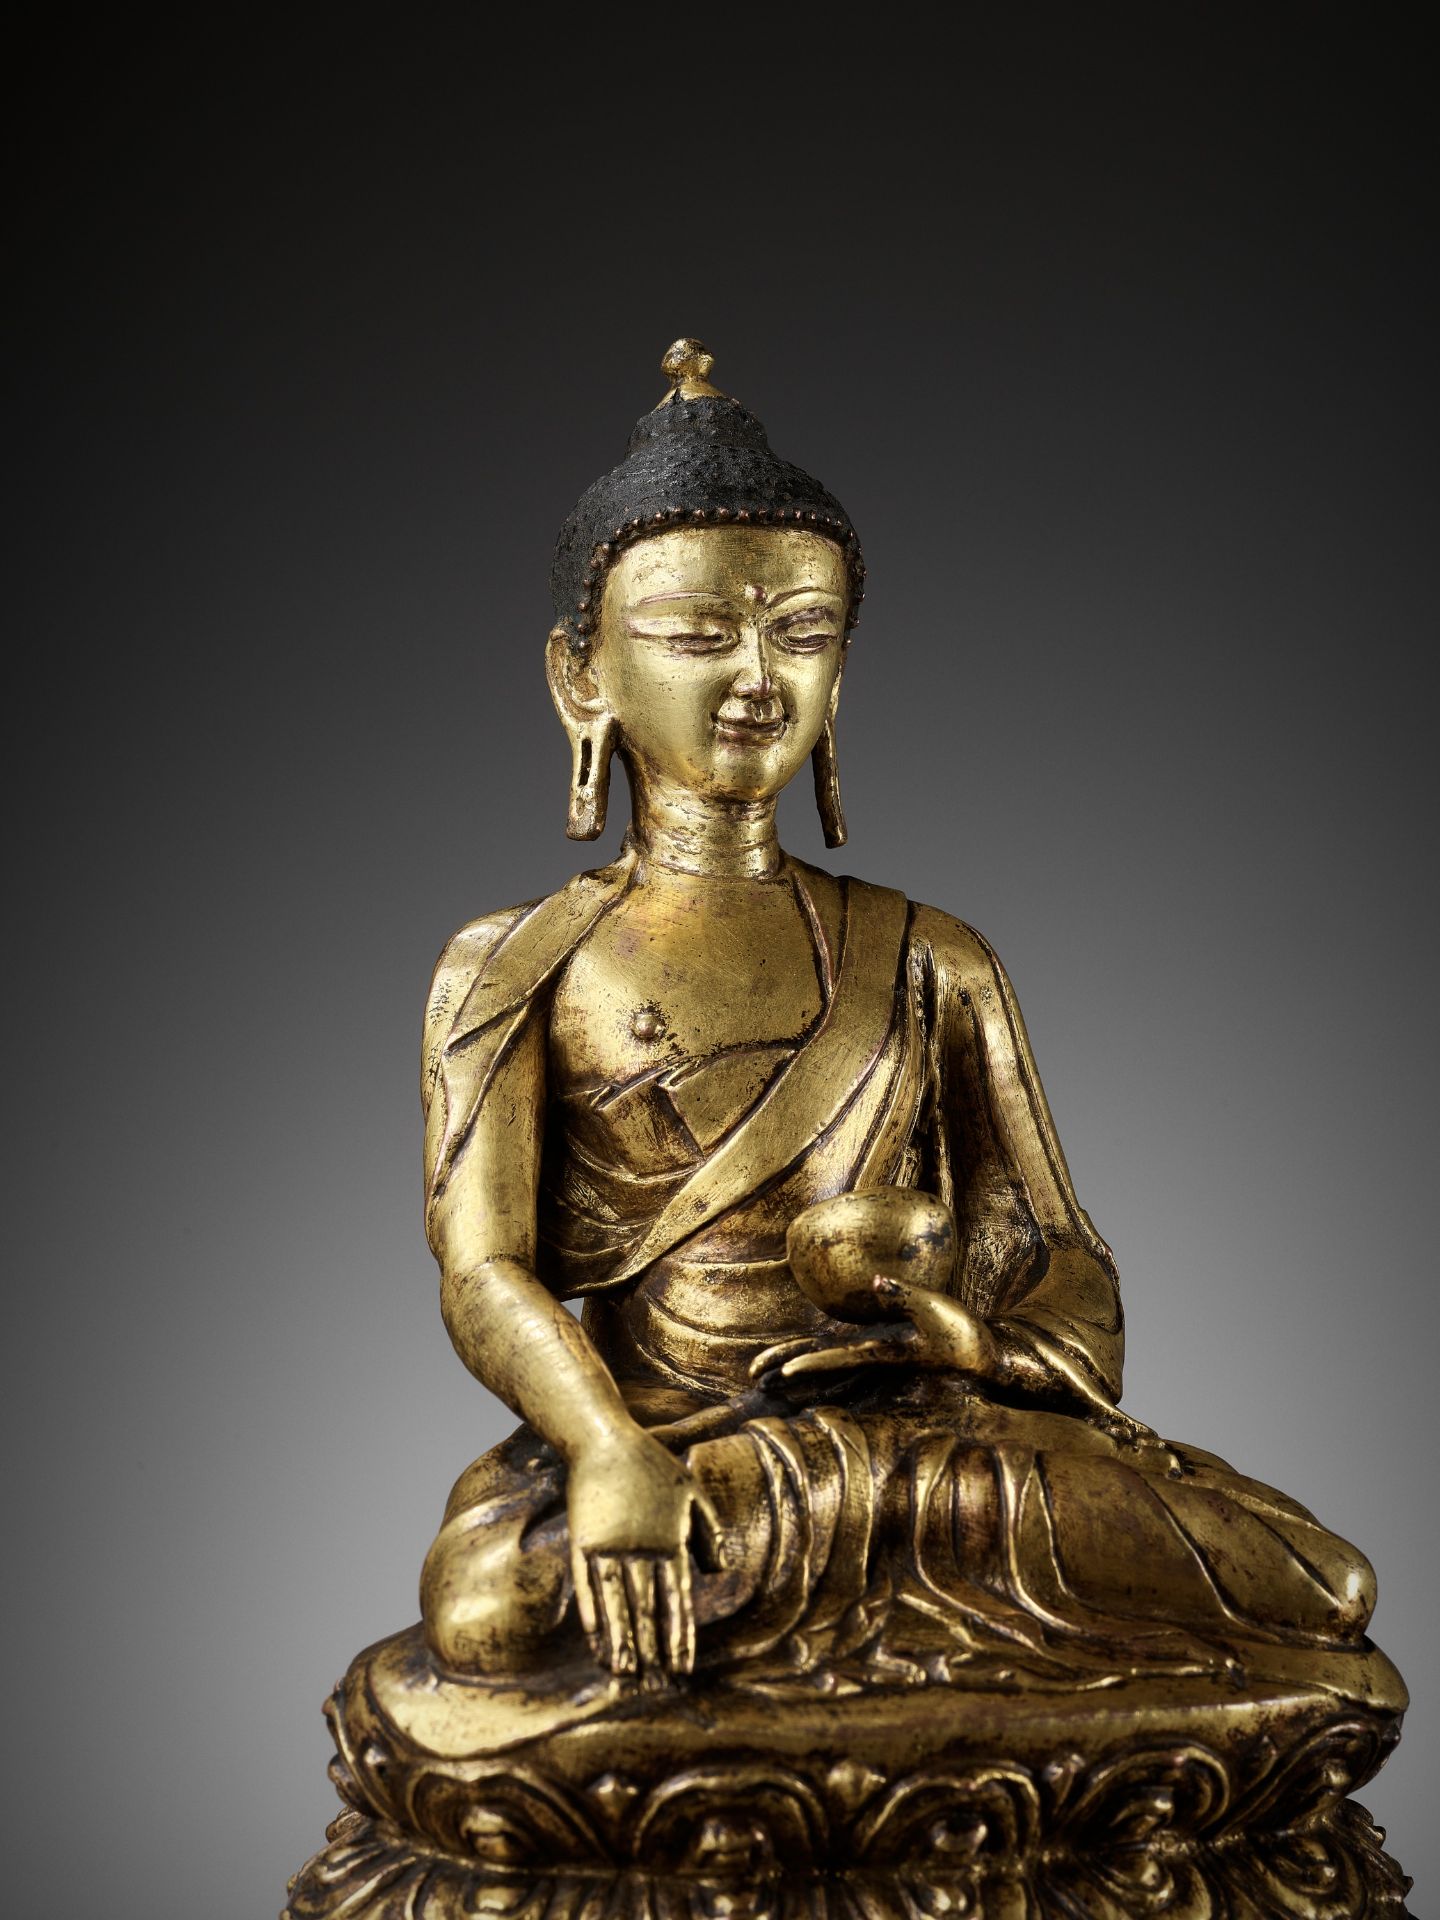 A GILT COPPER ALLOY FIGURE OF BUDDHA, 11TH-12TH CENTURY